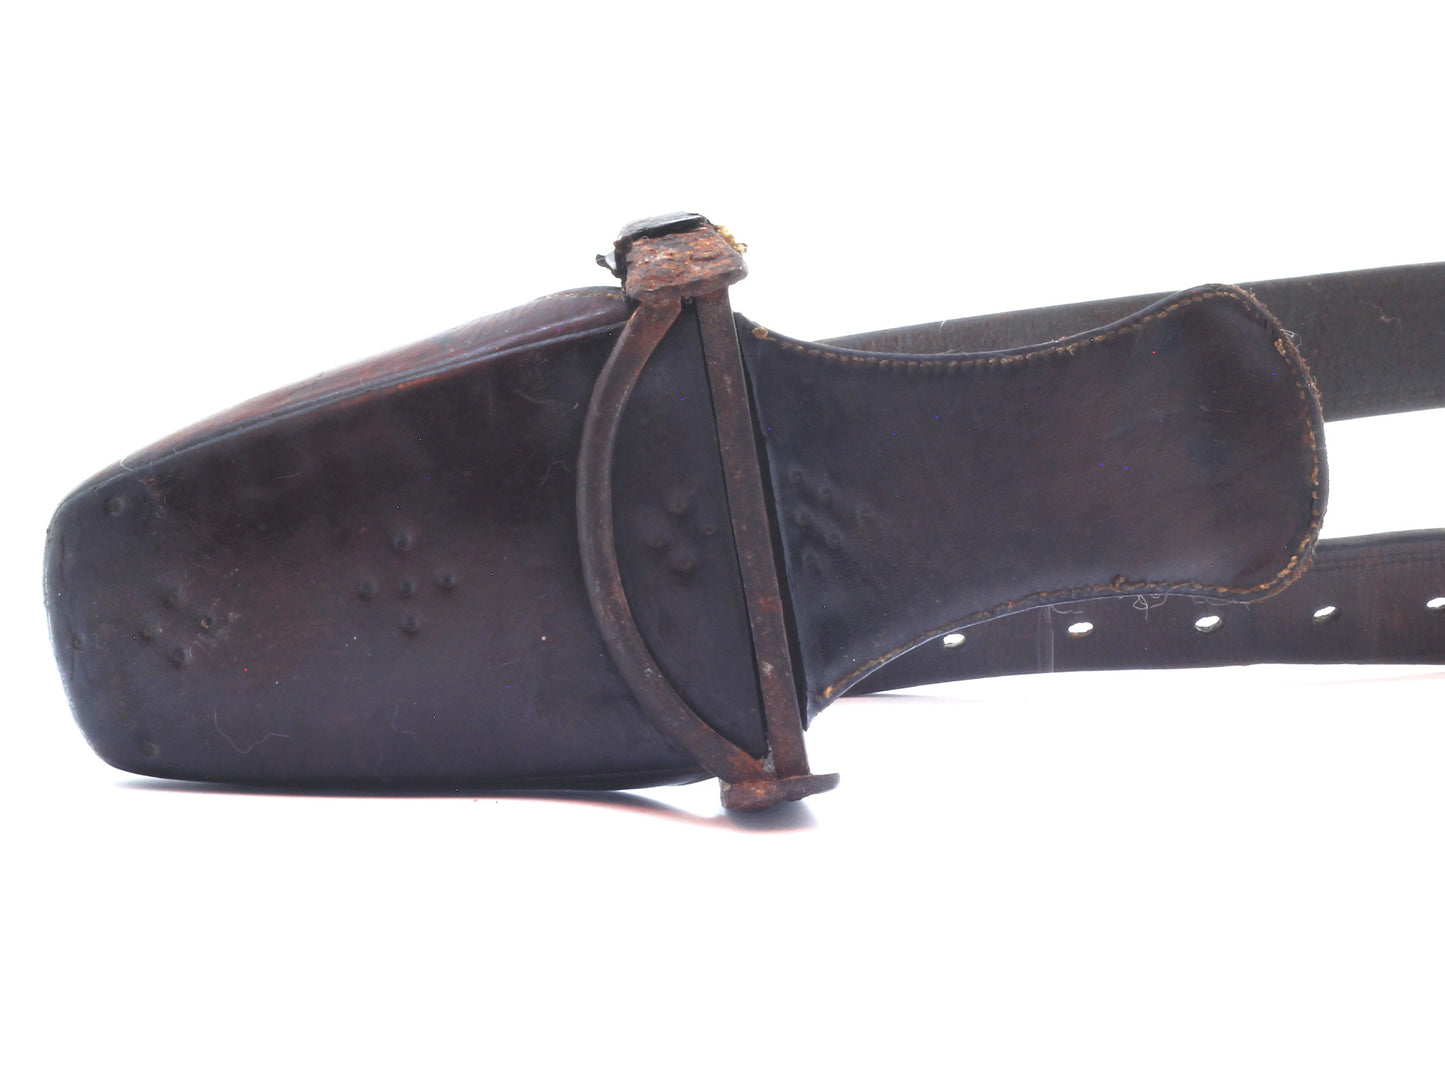 Leather slipper stirrup